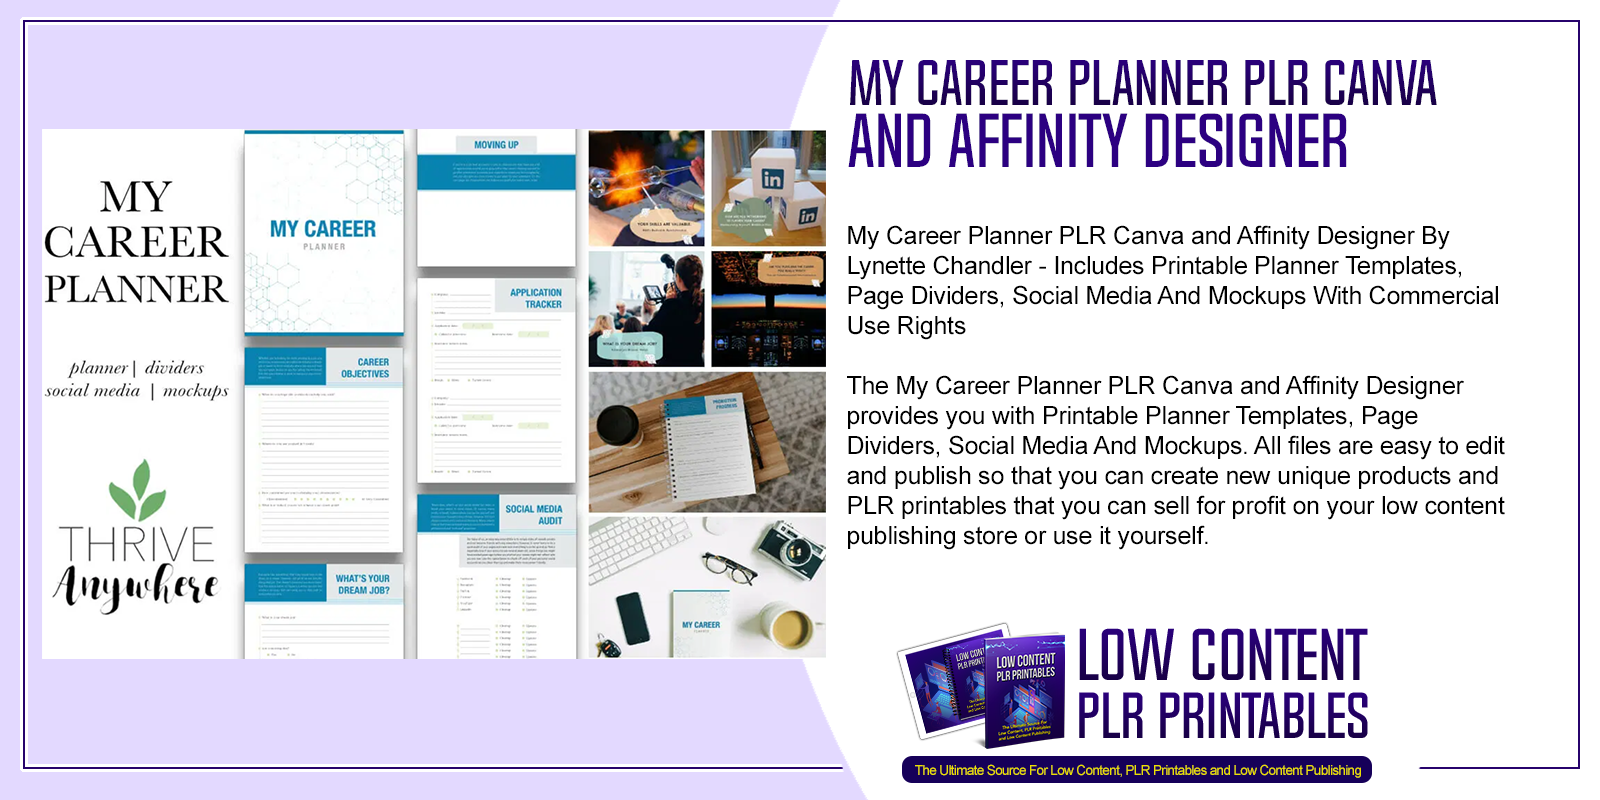 My Career Planner PLR Canva and Affinity Designer